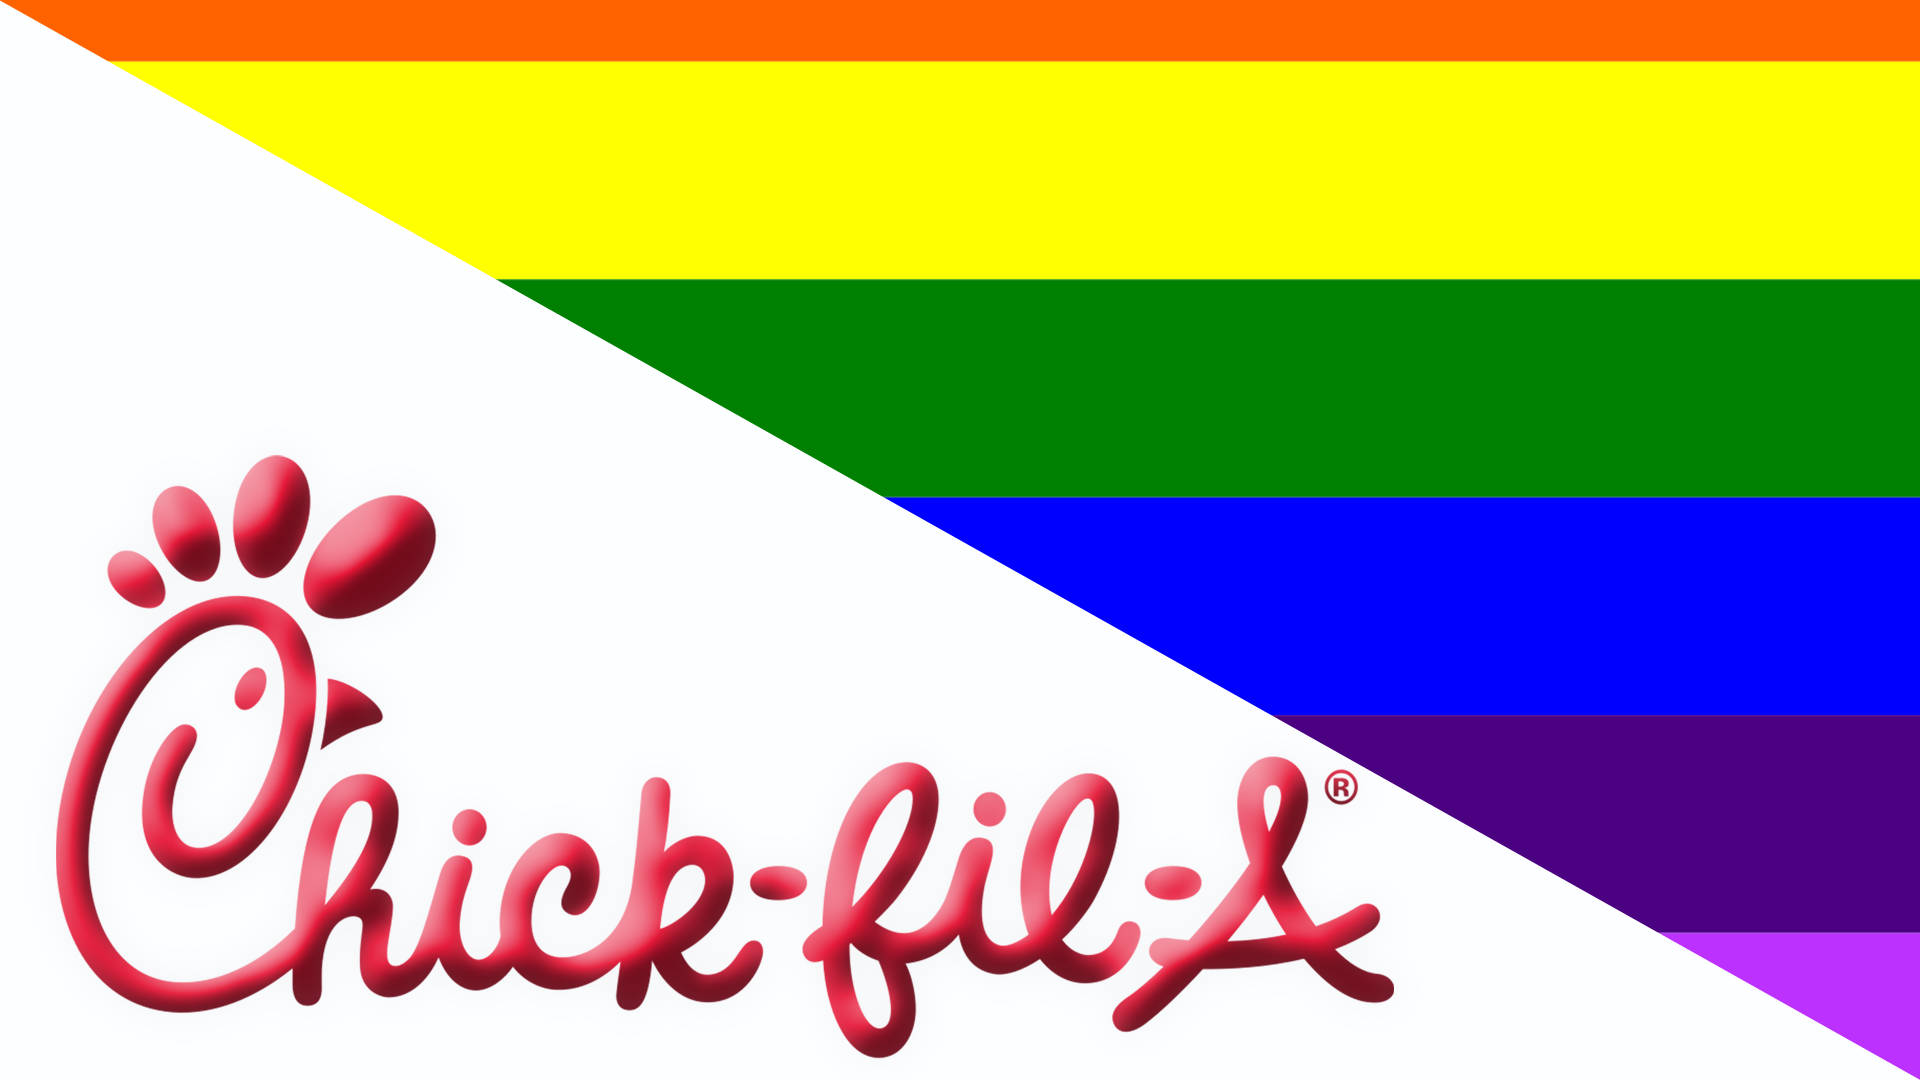 Chick Fil A Rainbow Poster Wallpaper